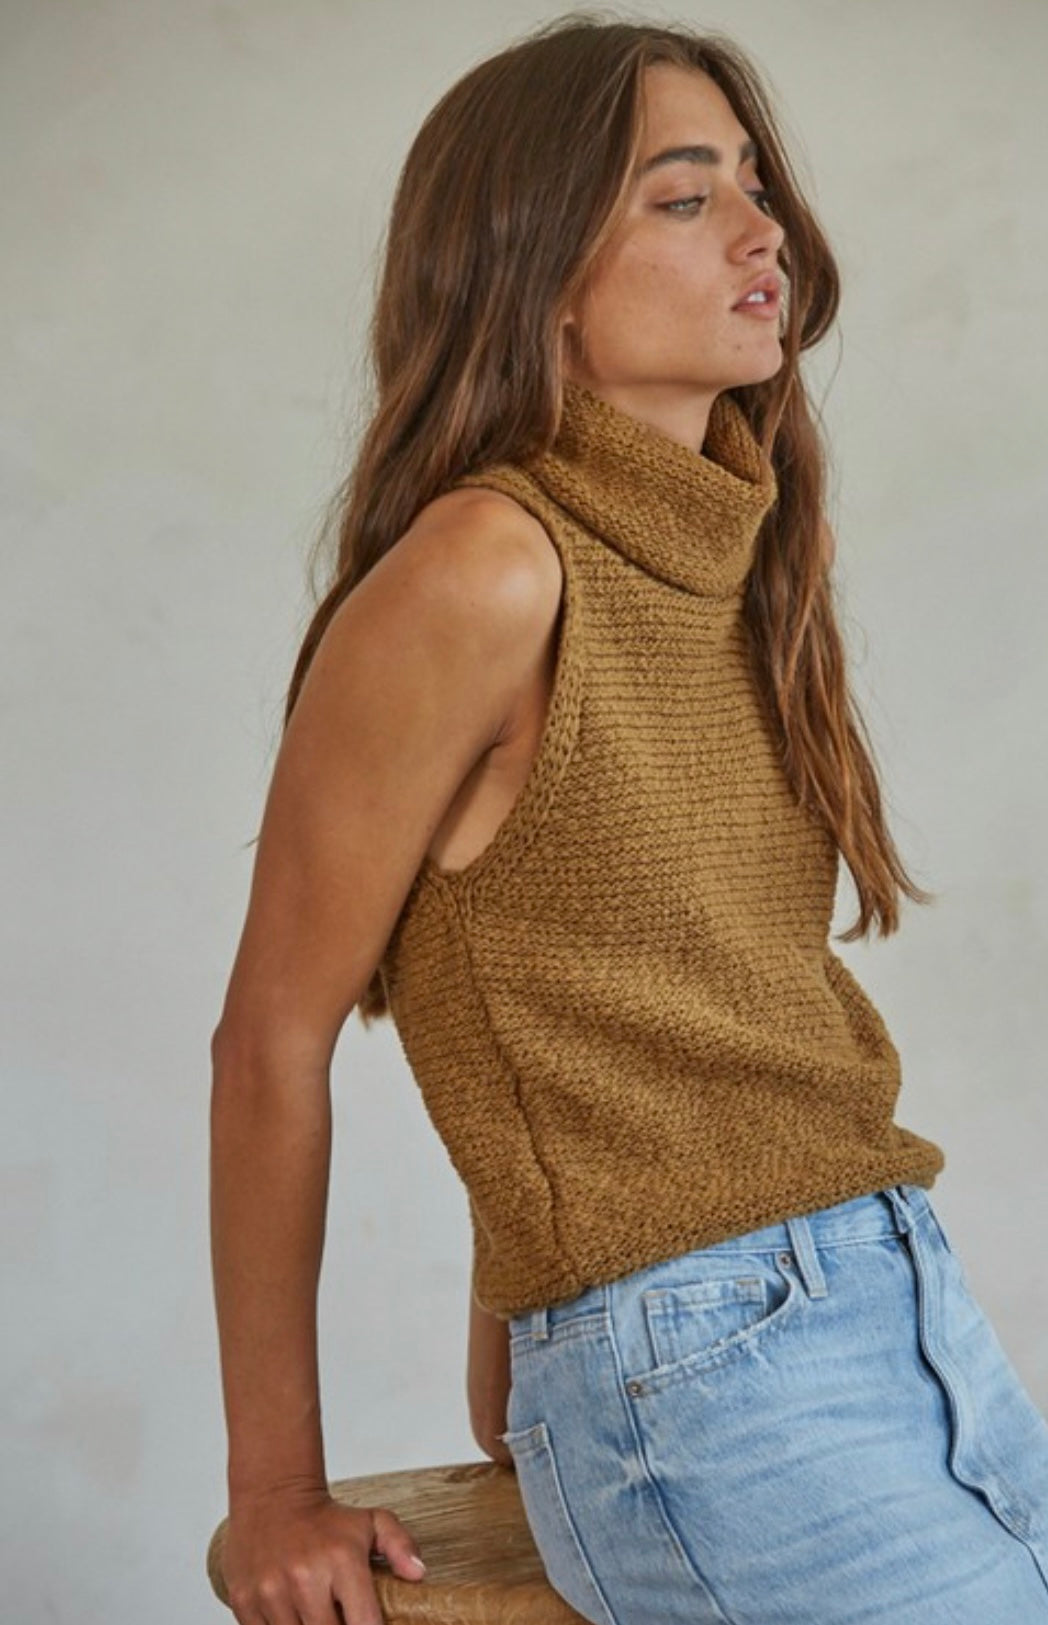 Salma sweater turtleneck top